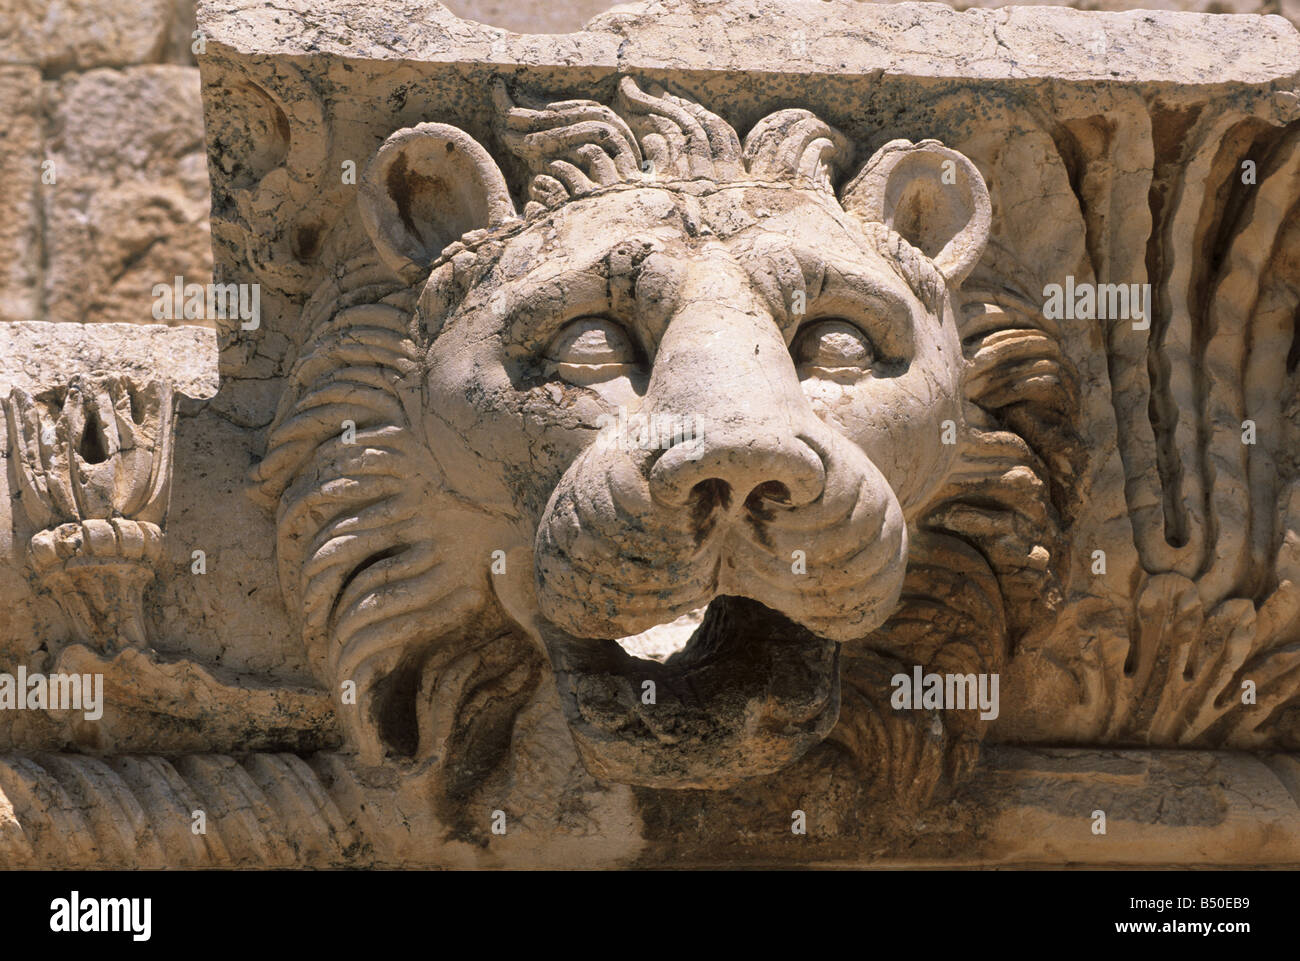 Elk163 2008 Lebanon Baalbek Bekaa Valley Roman ruins detail lion head downspout Stock Photo